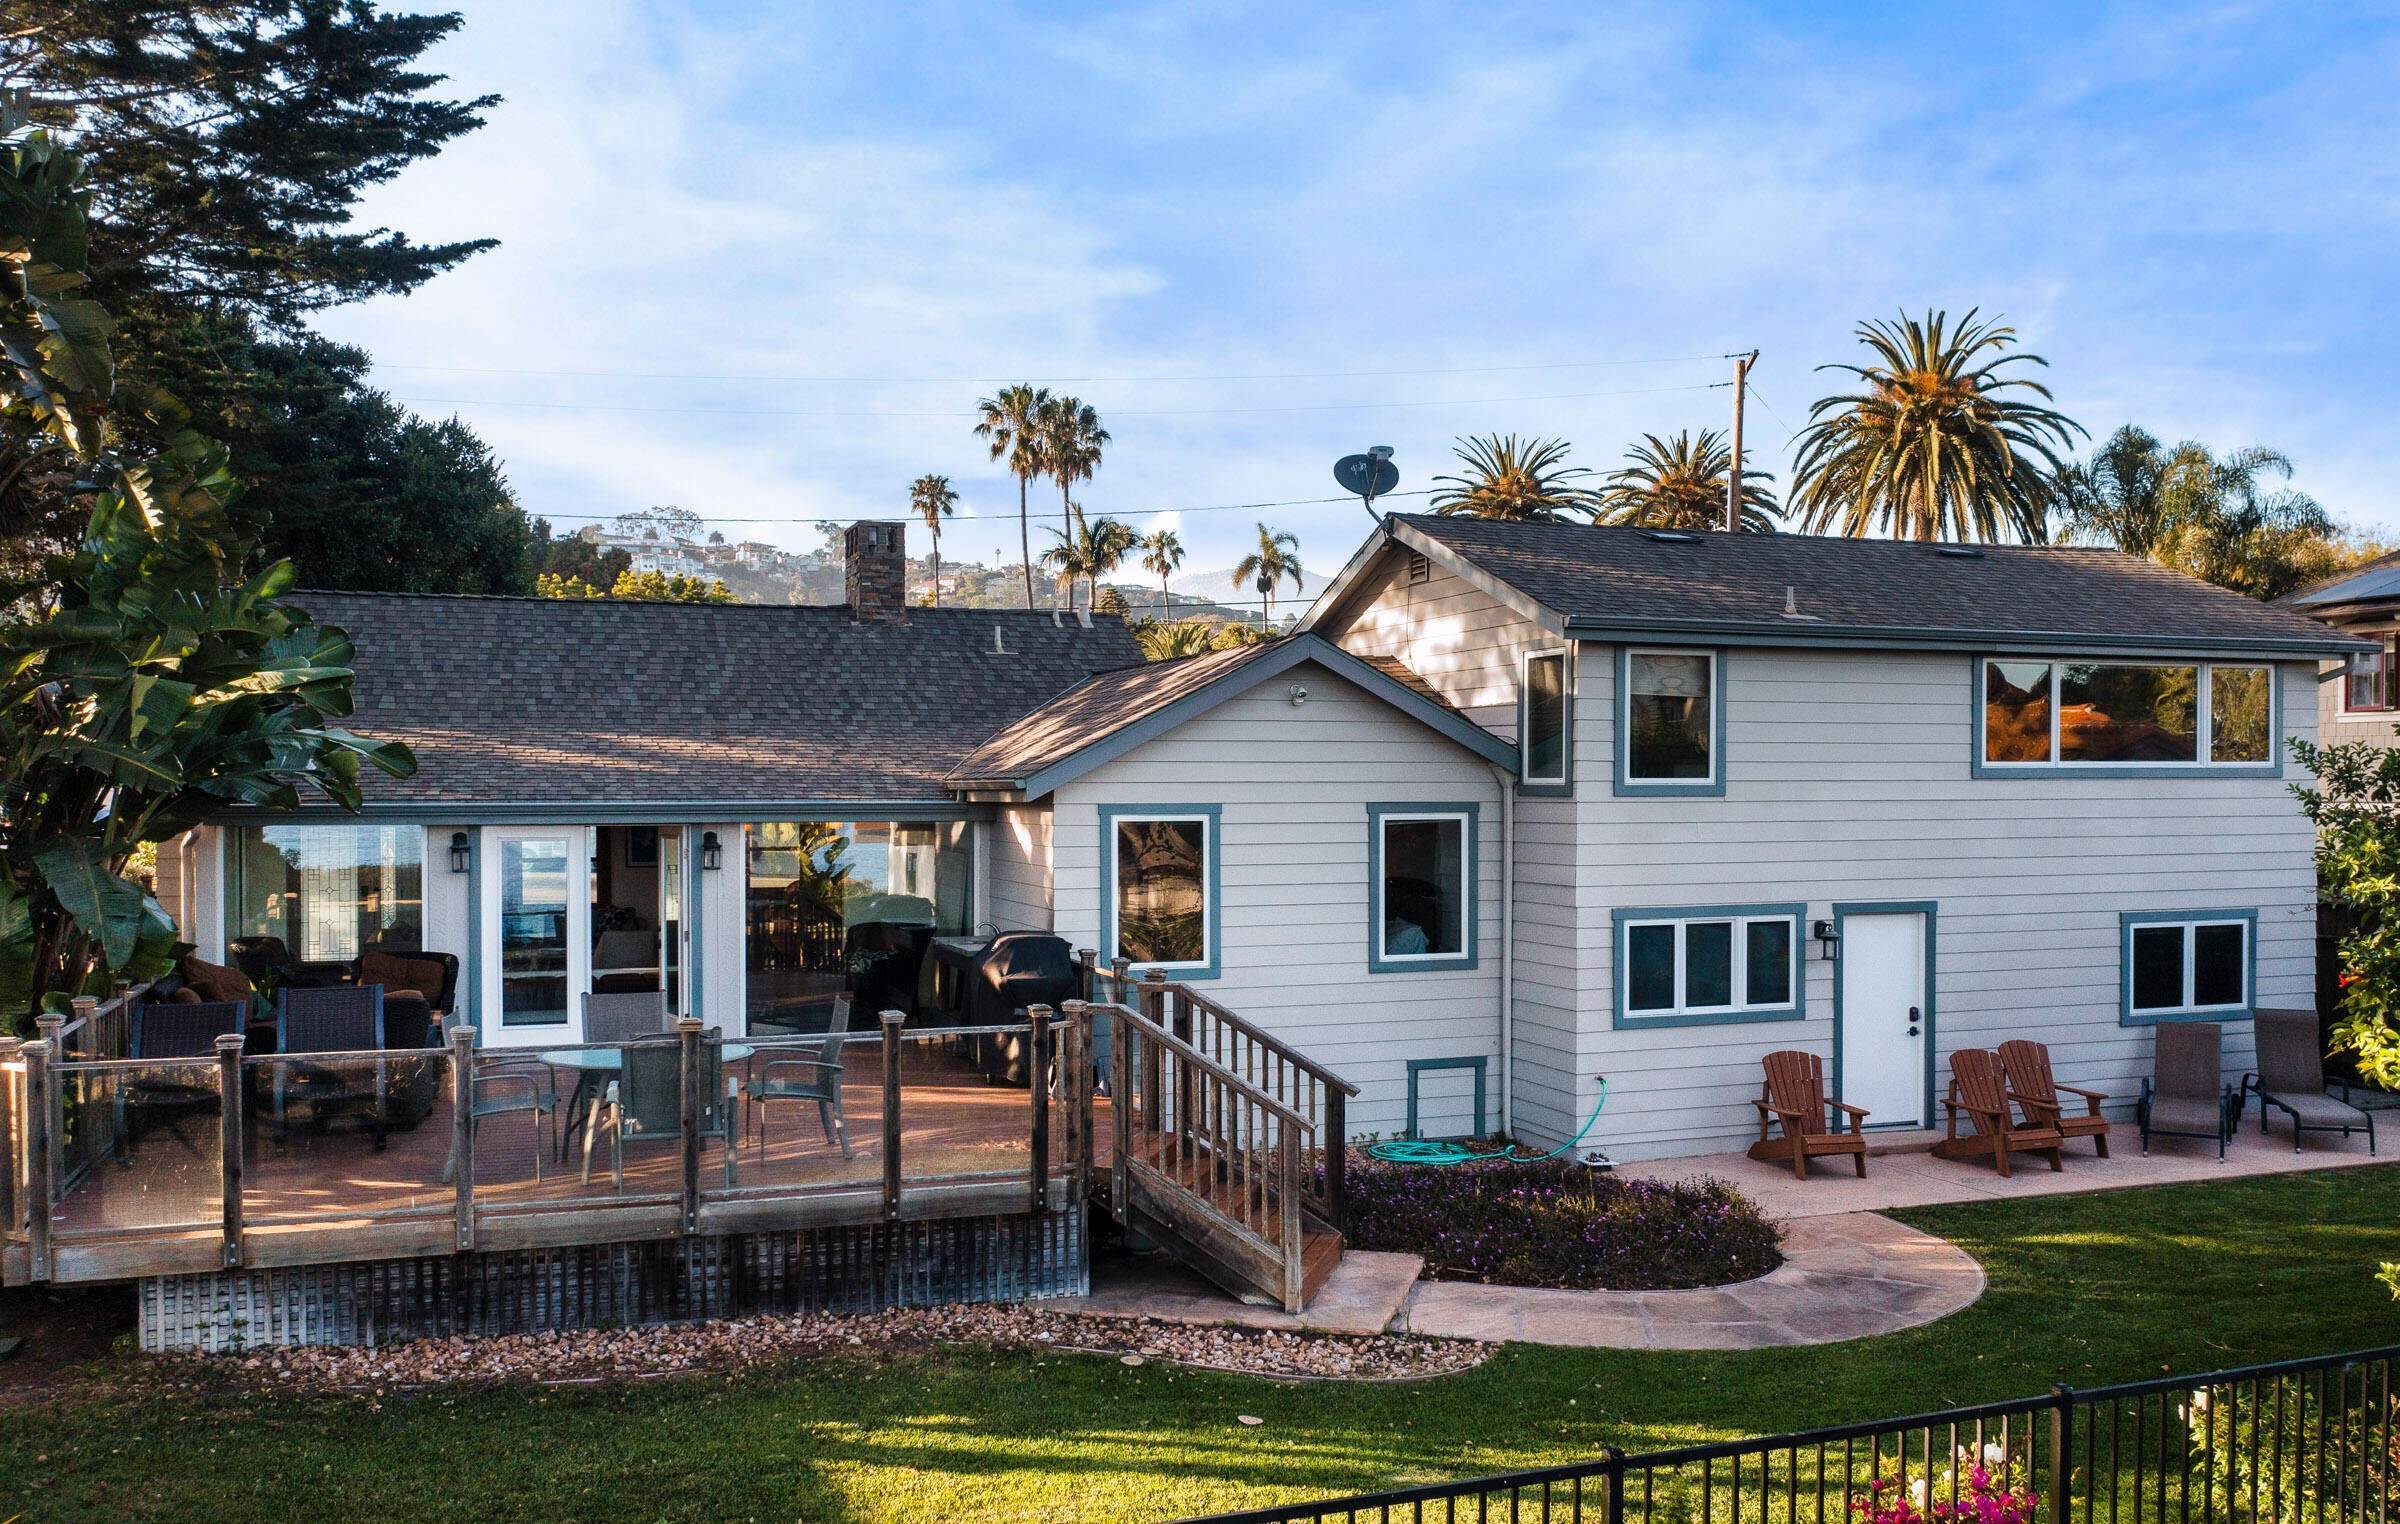 30. Estate for Sale at 1409 -1413 Shoreline Drive Santa Barbara, California 93109 United States